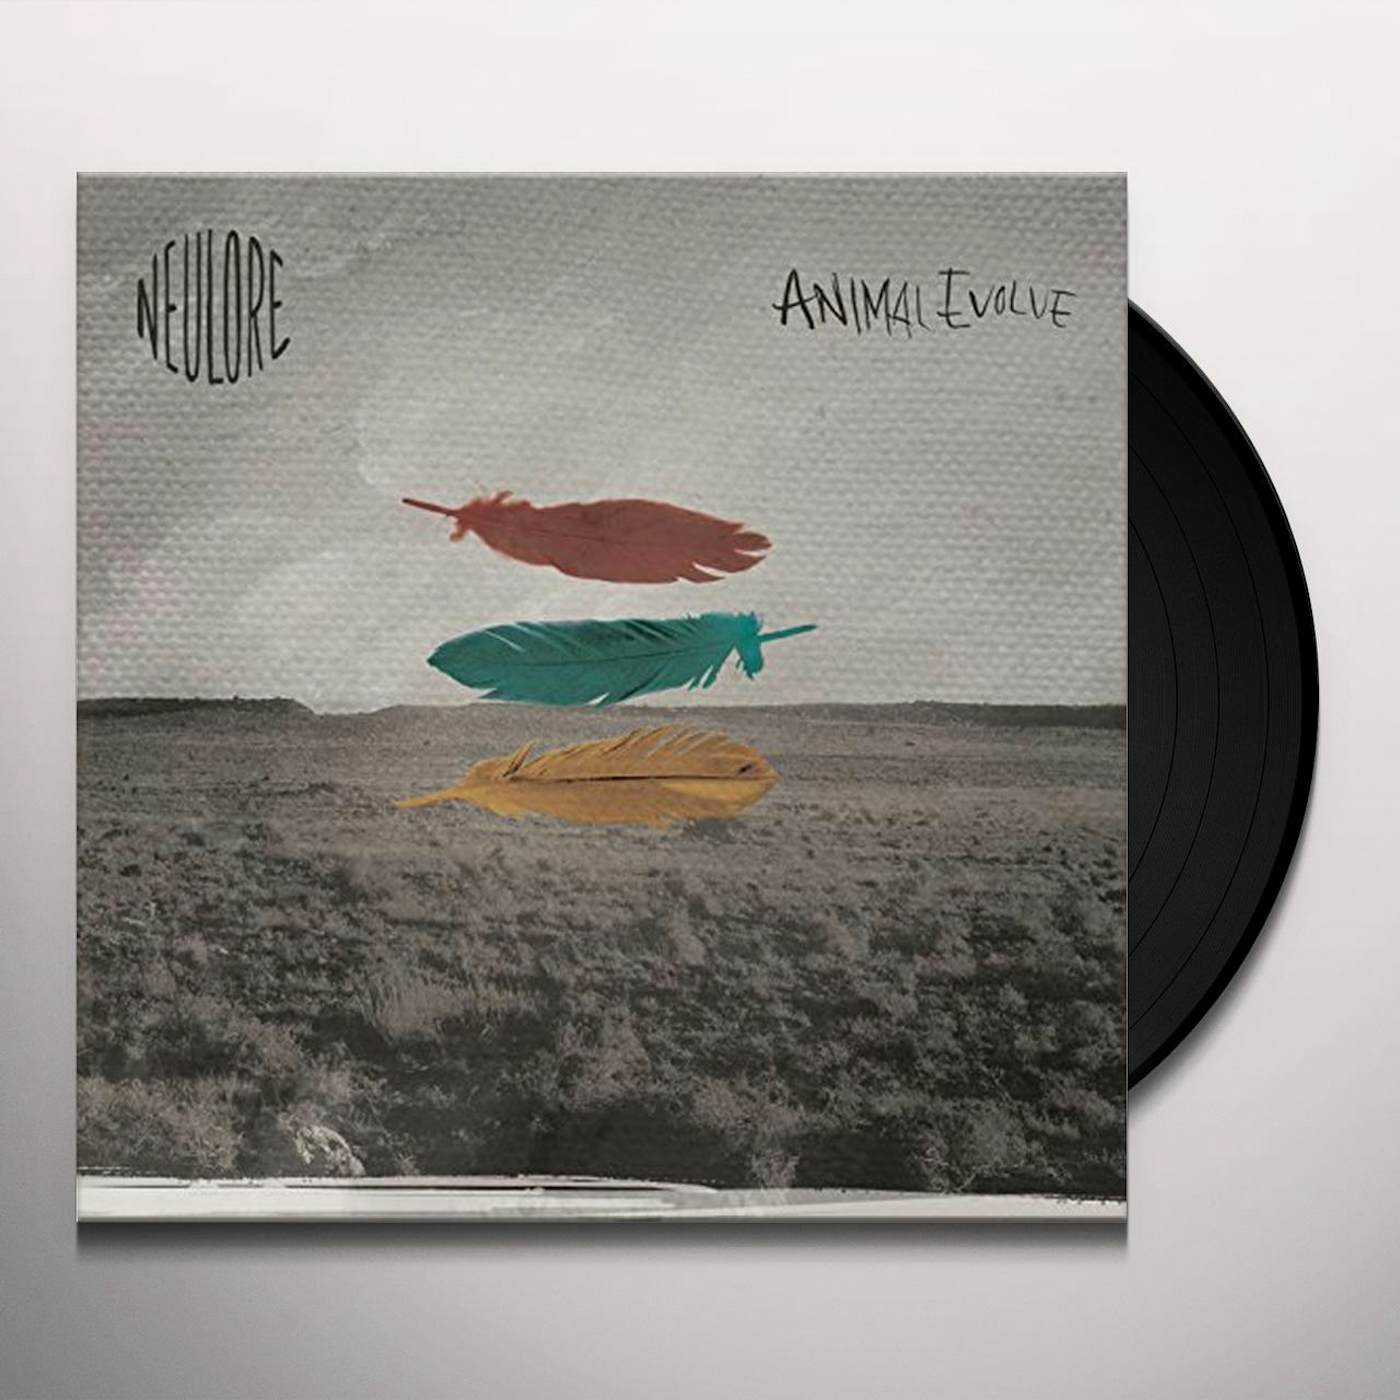 Neulore ANIMAL EVOLVE Vinyl Record